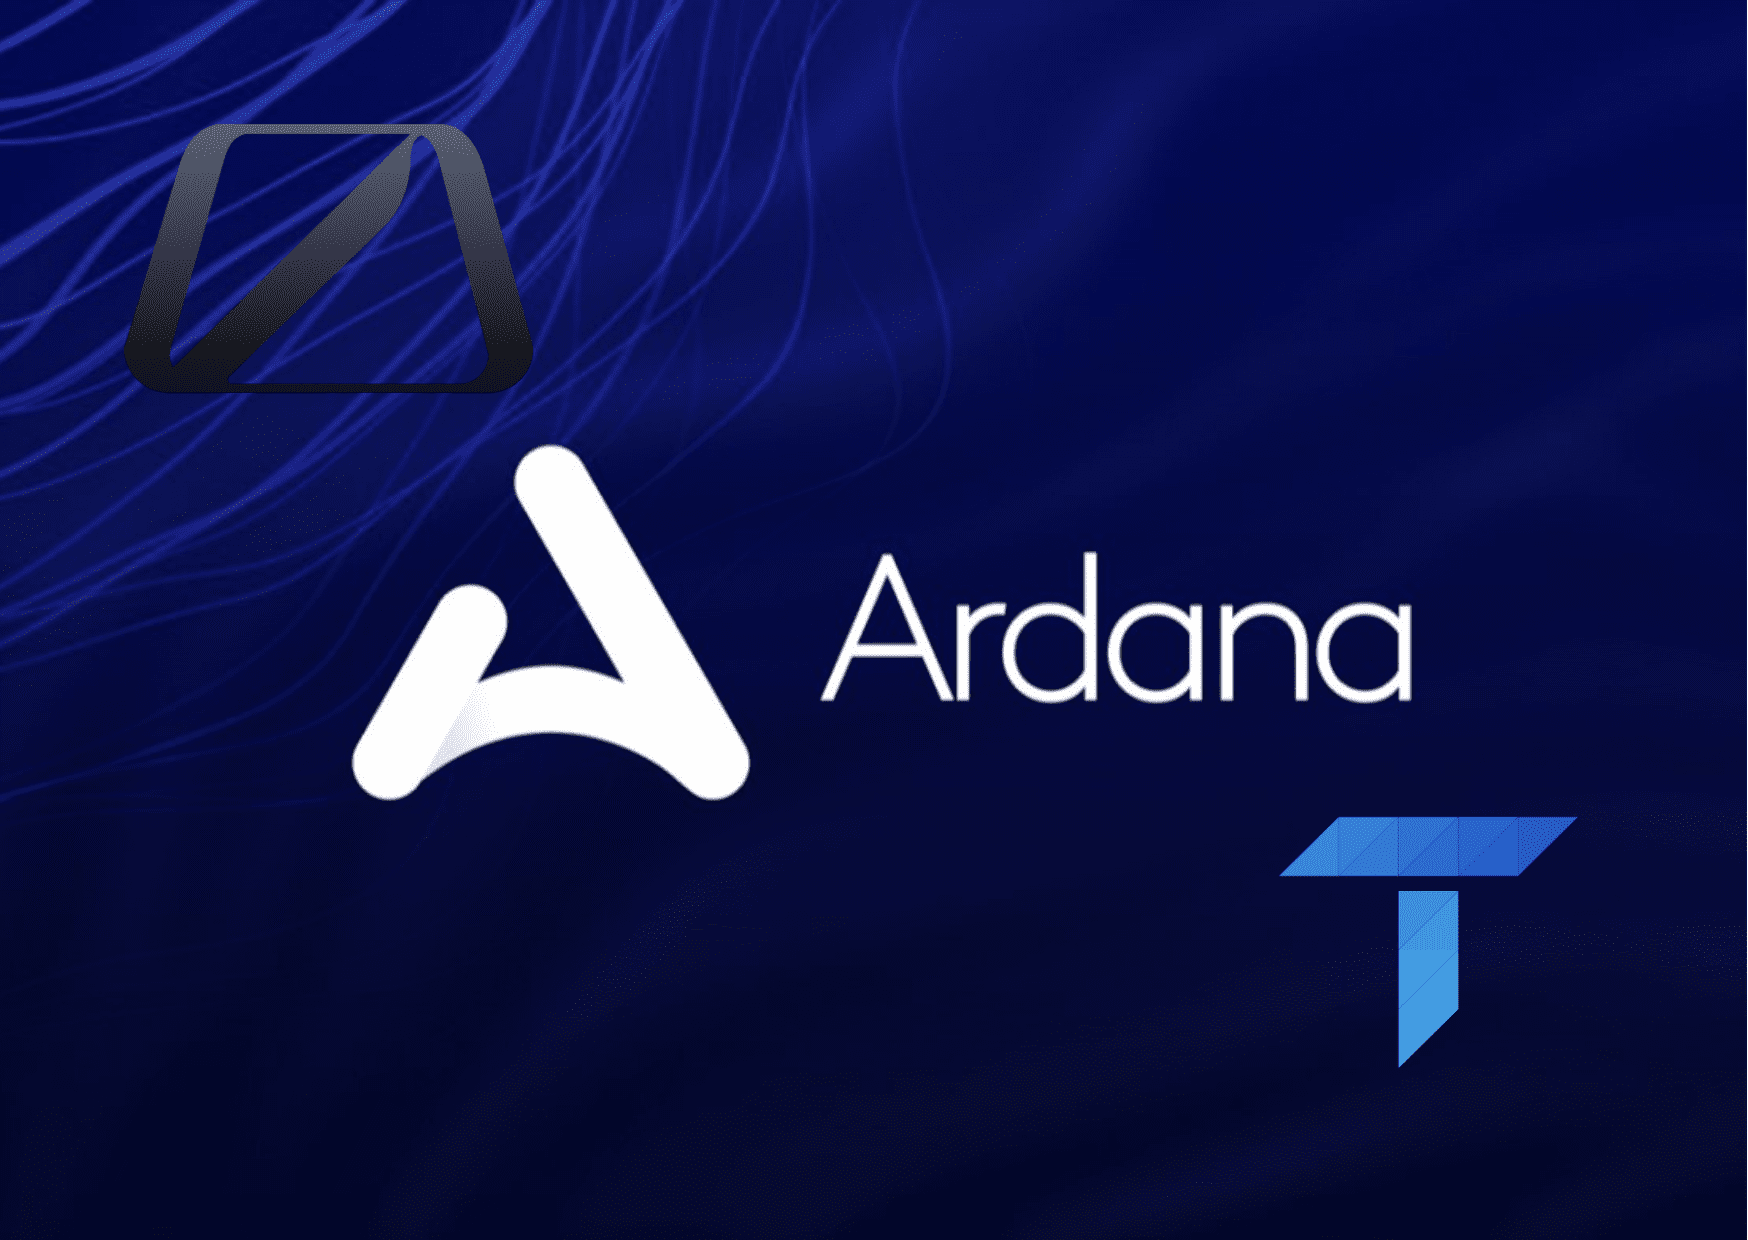 Ardana raises 1.5m to build Cardano’s DeFi platform and stablecoin ecosystem